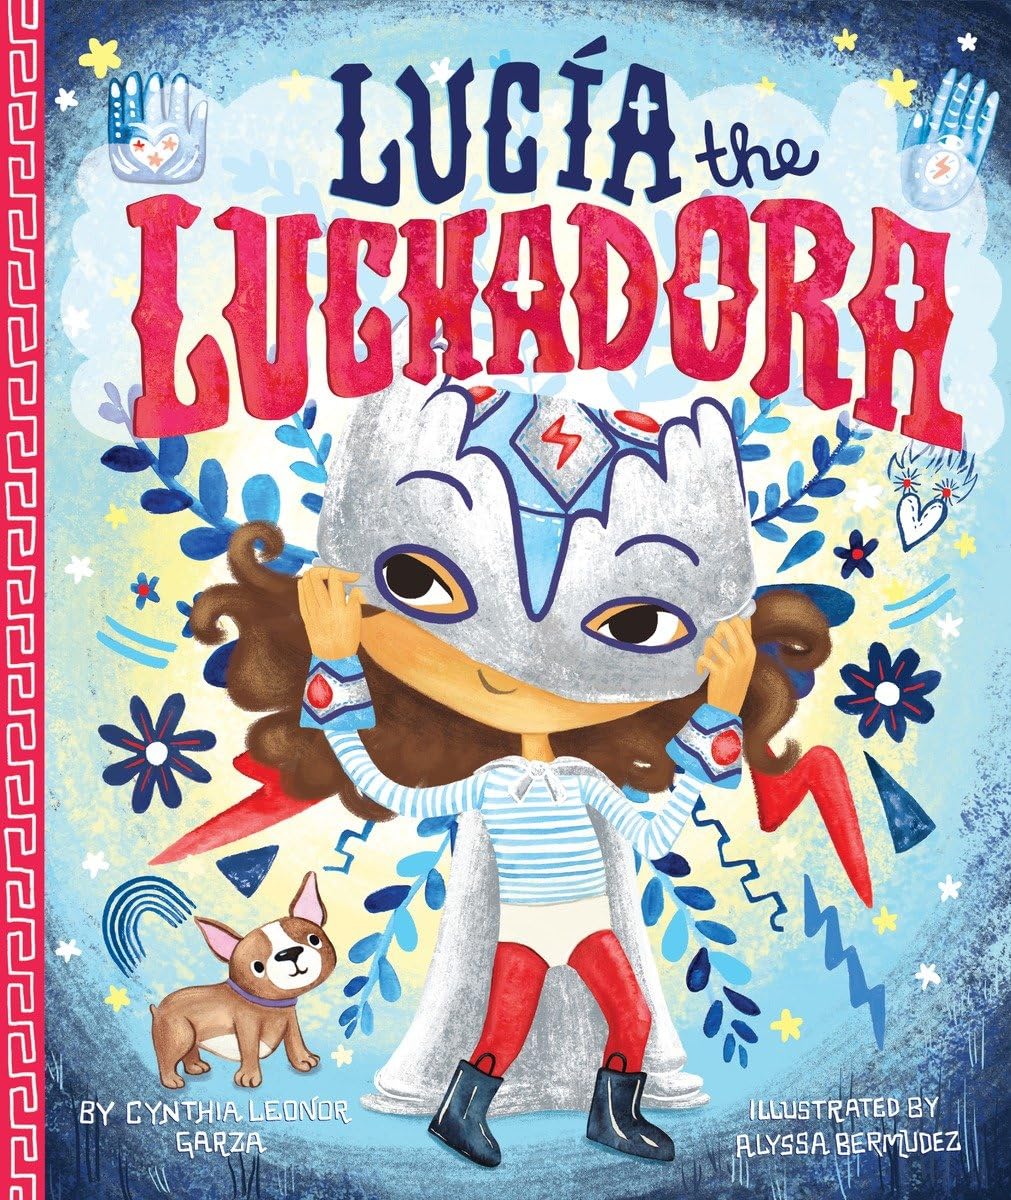 Cover of Lucia the Luchadora by Cynthia Leonor Garza, illustrated by Alyssa Bermudez